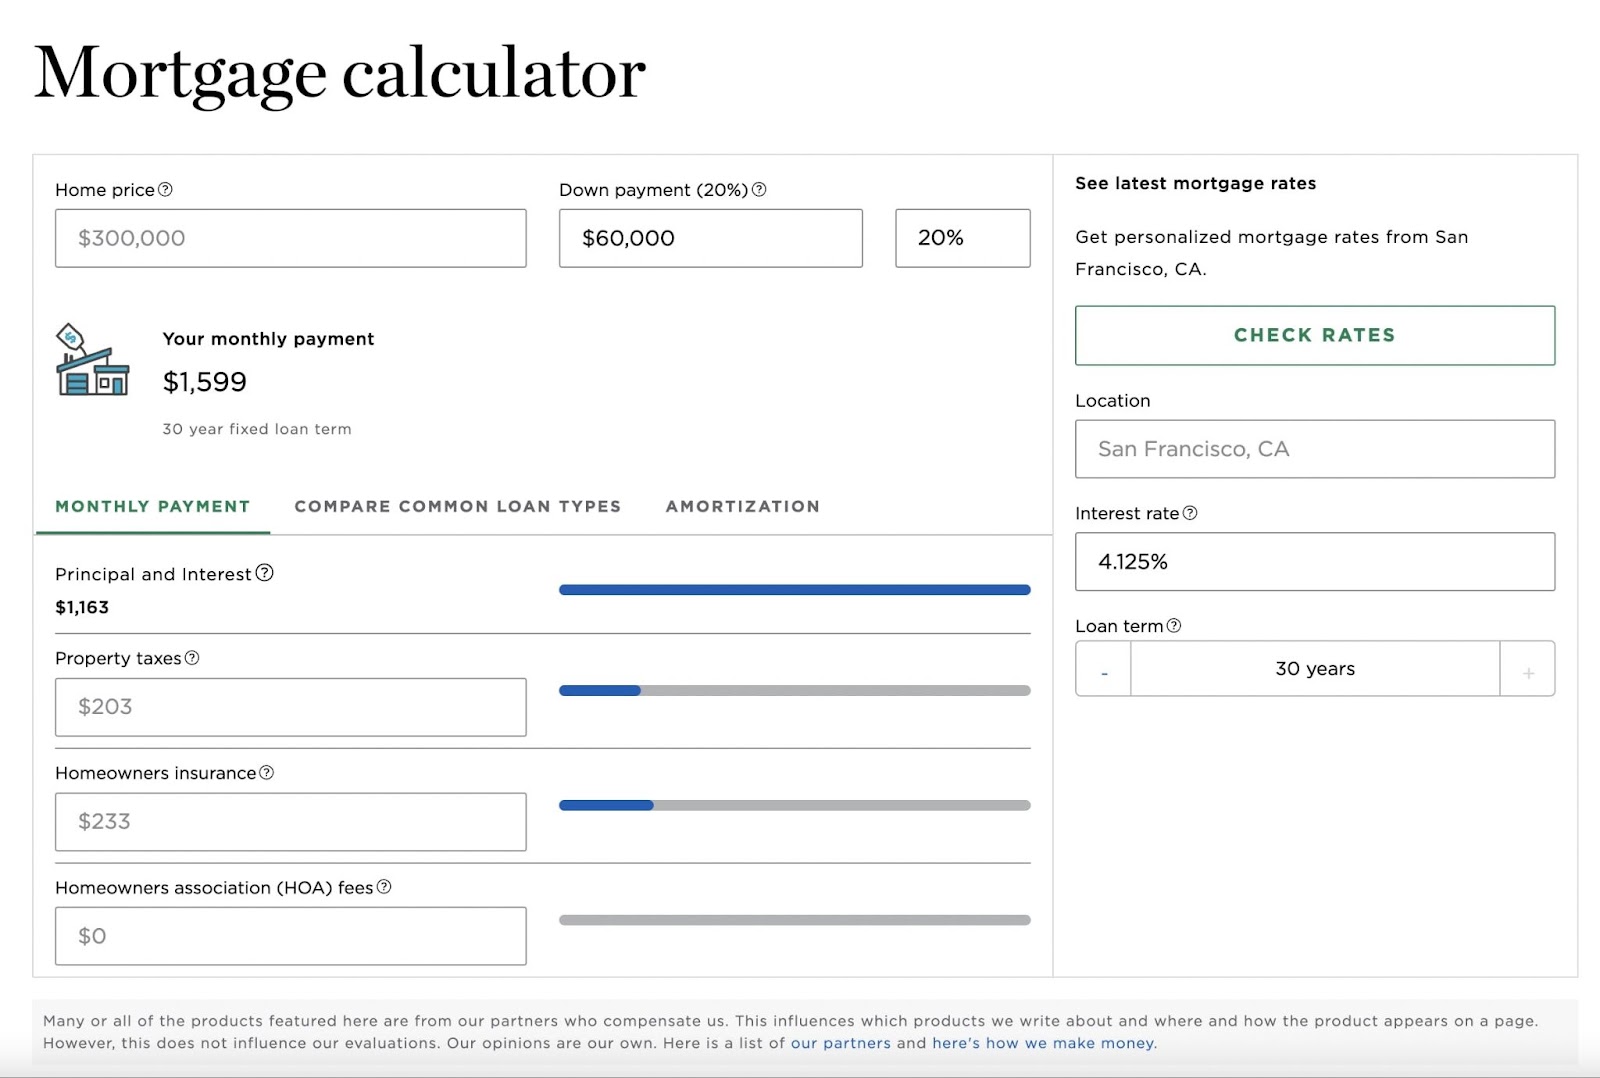 Mortgage calculator page